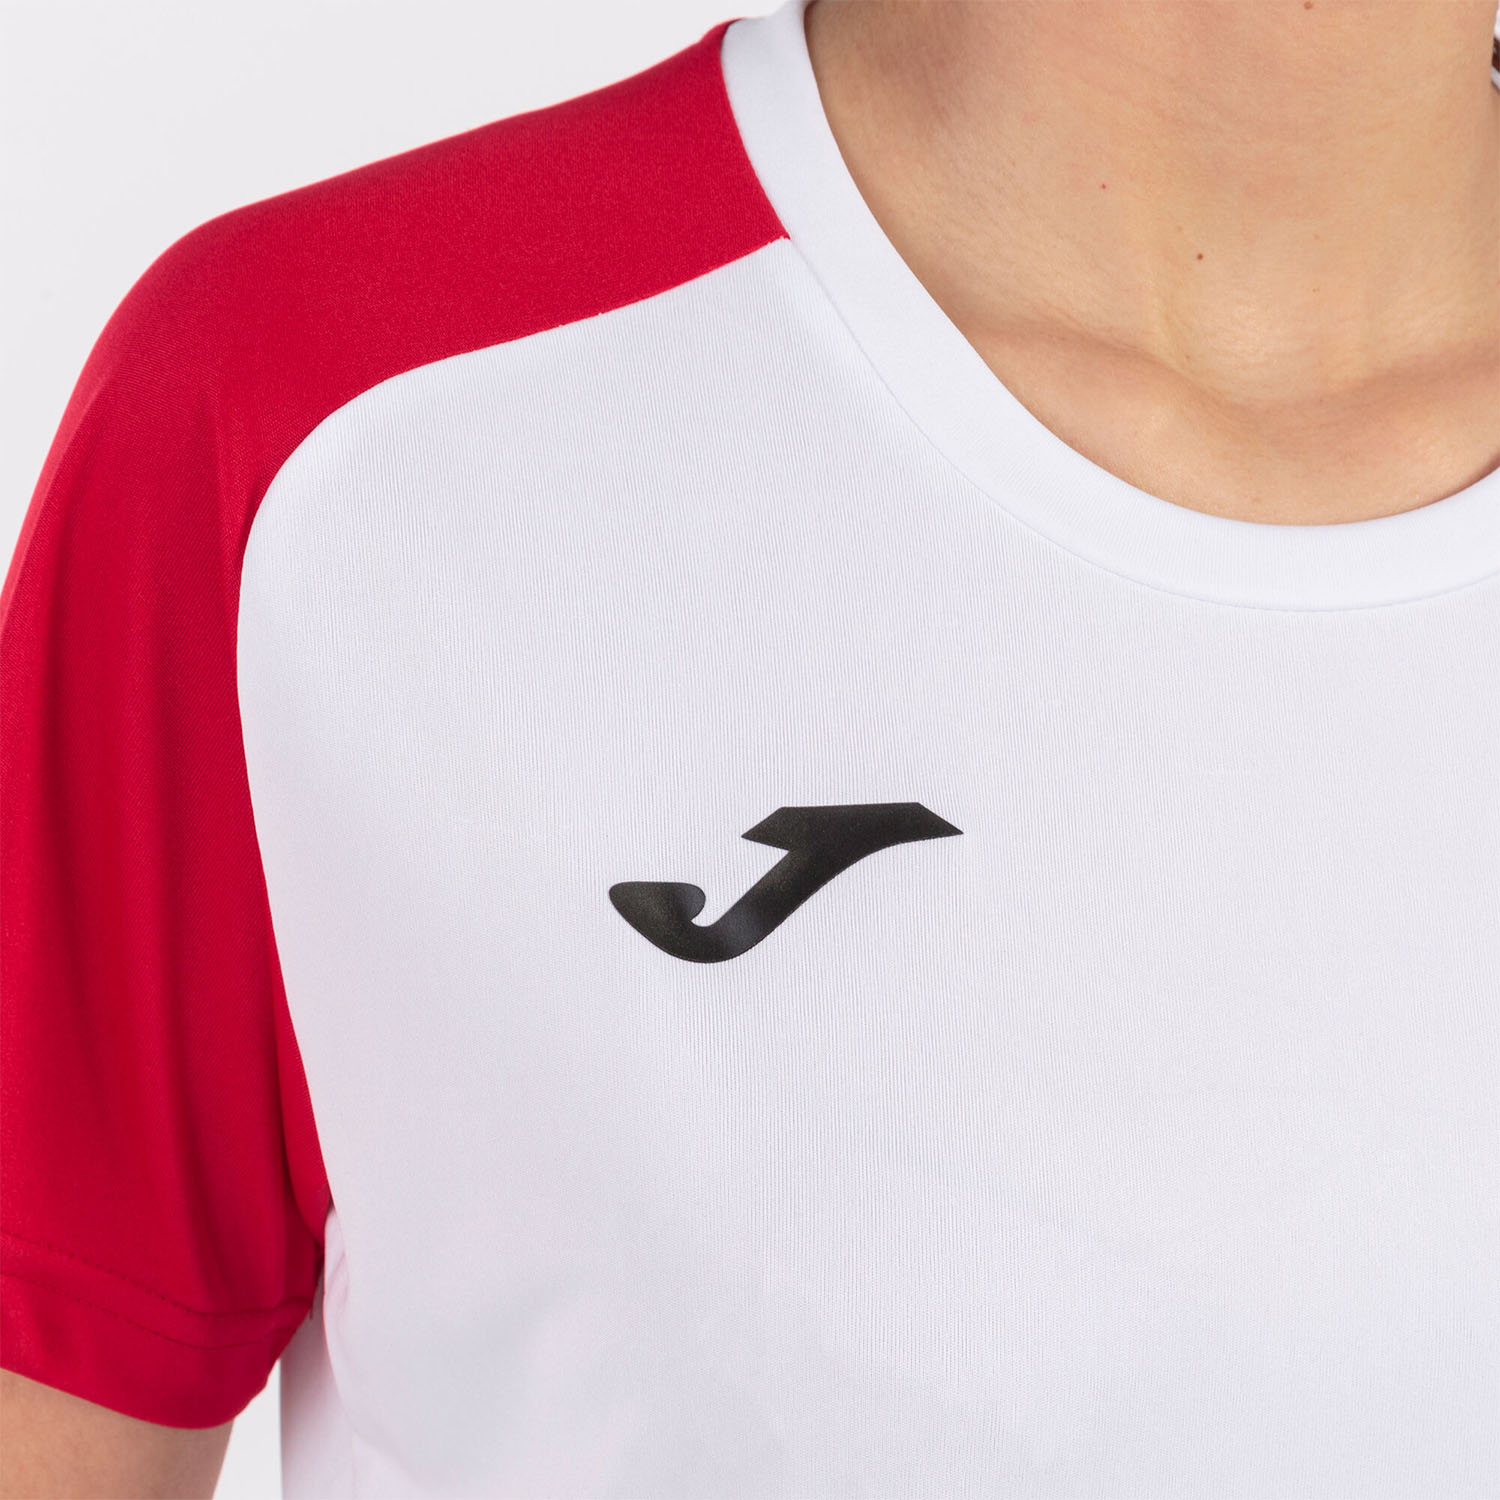 Joma Academy IV Camiseta - White/Red